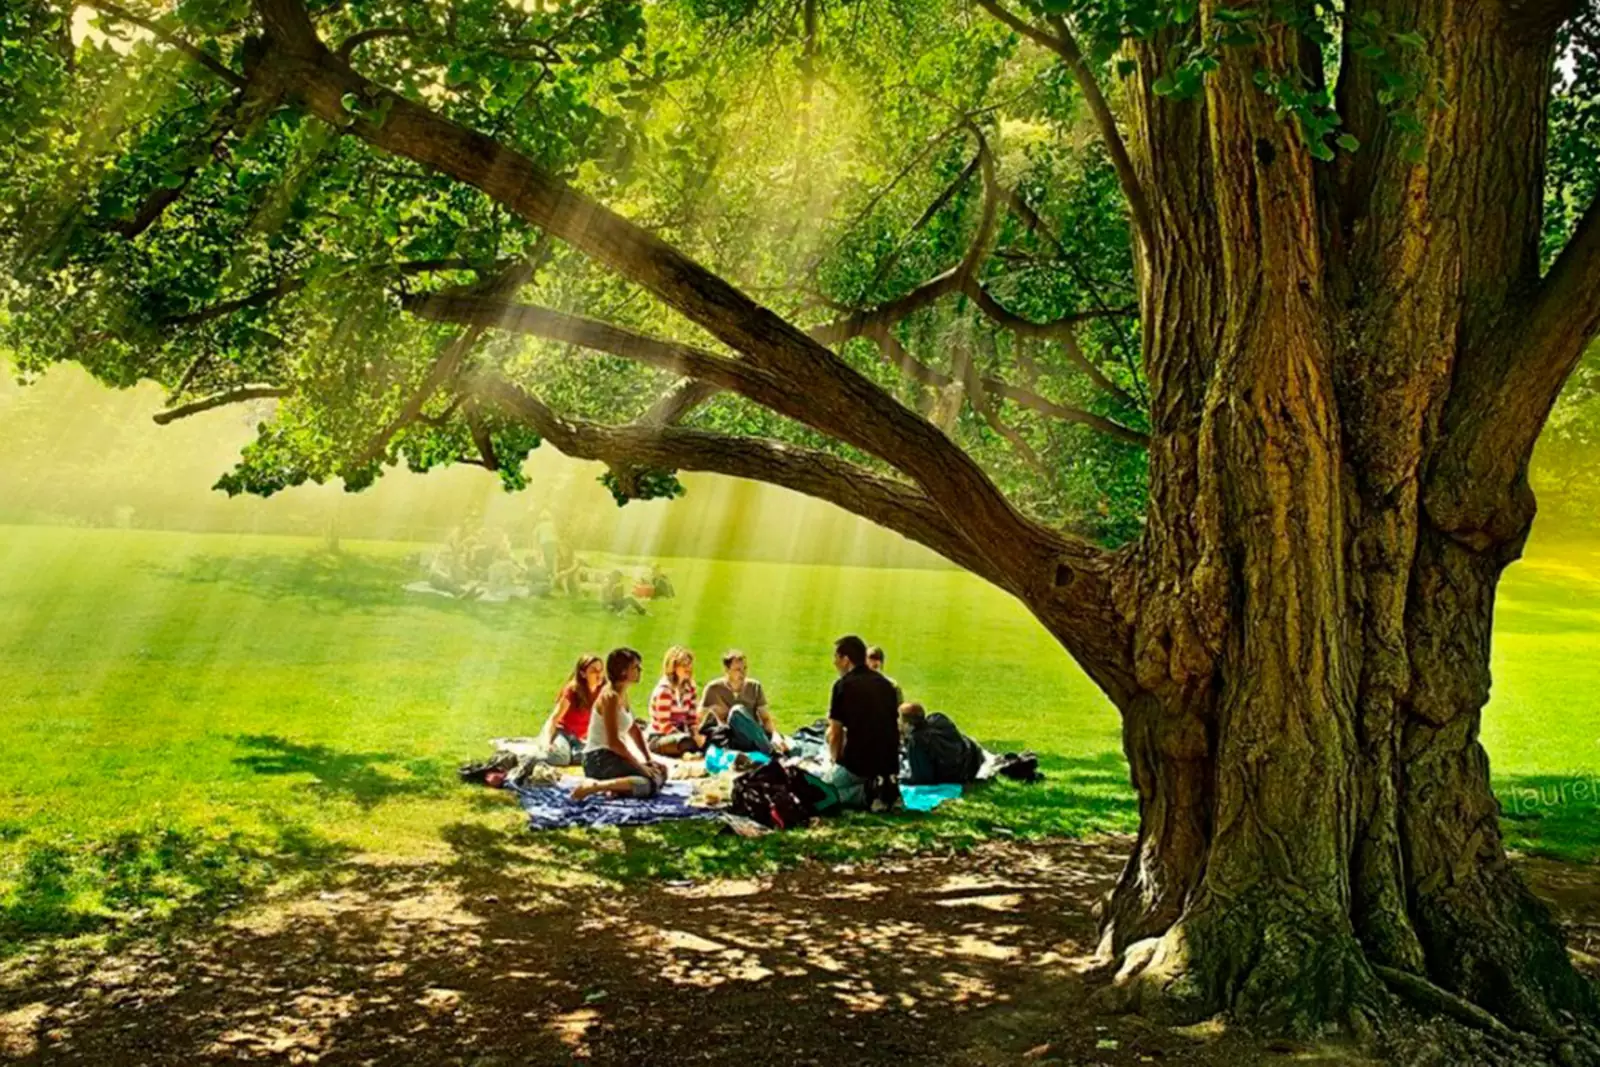 Interest in nature. Пикник в лесу. Люди отдыхают на природе. Пикник под деревом. Человек и природа.